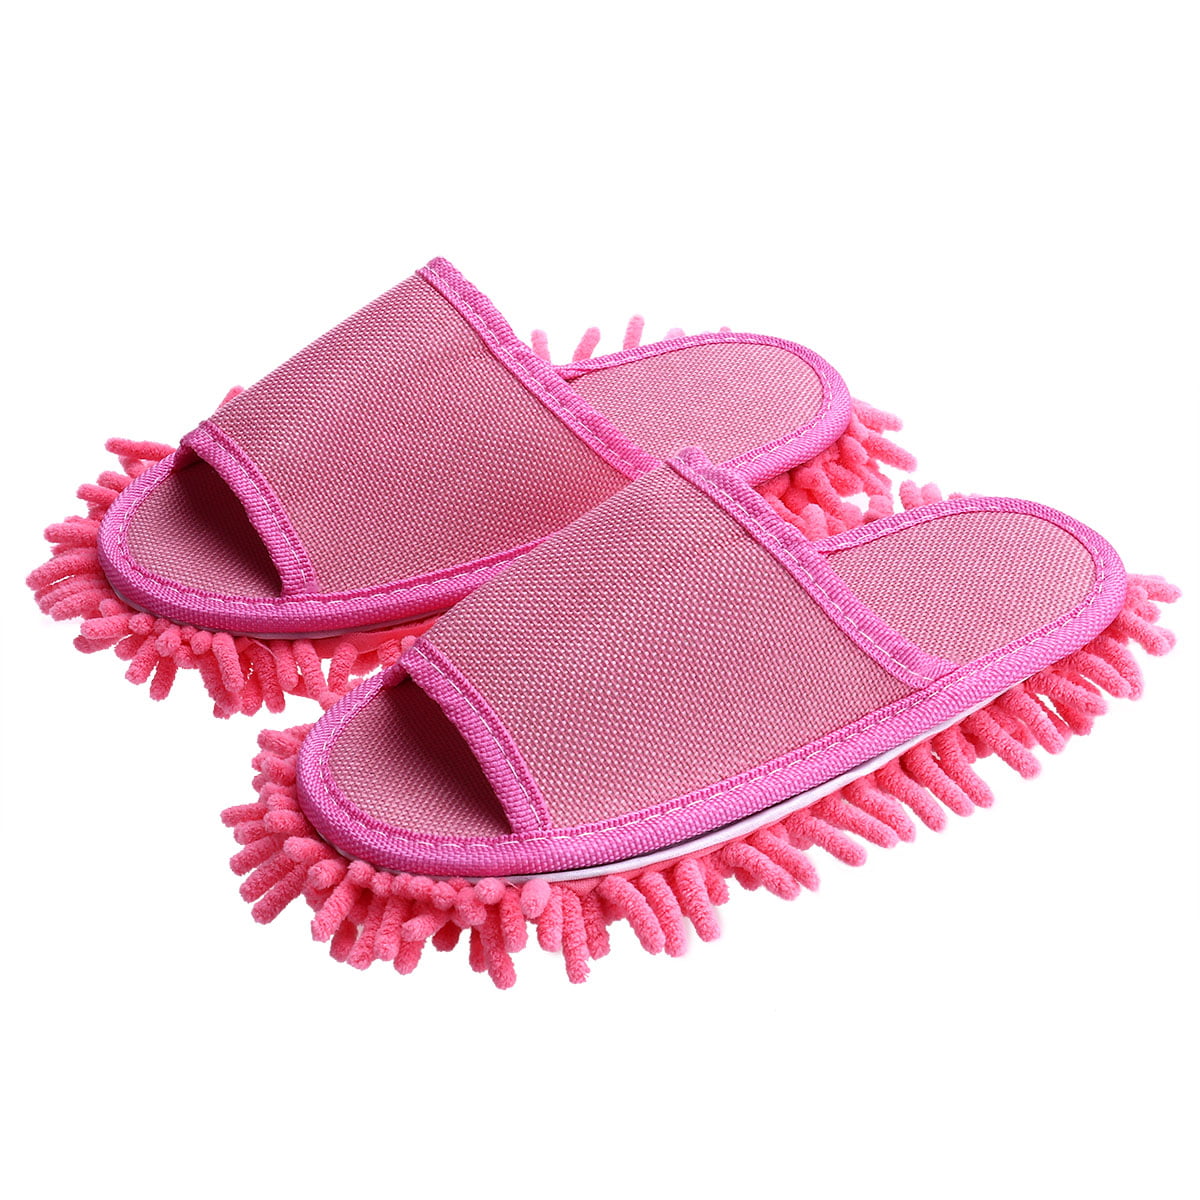 dusting slippers walmart